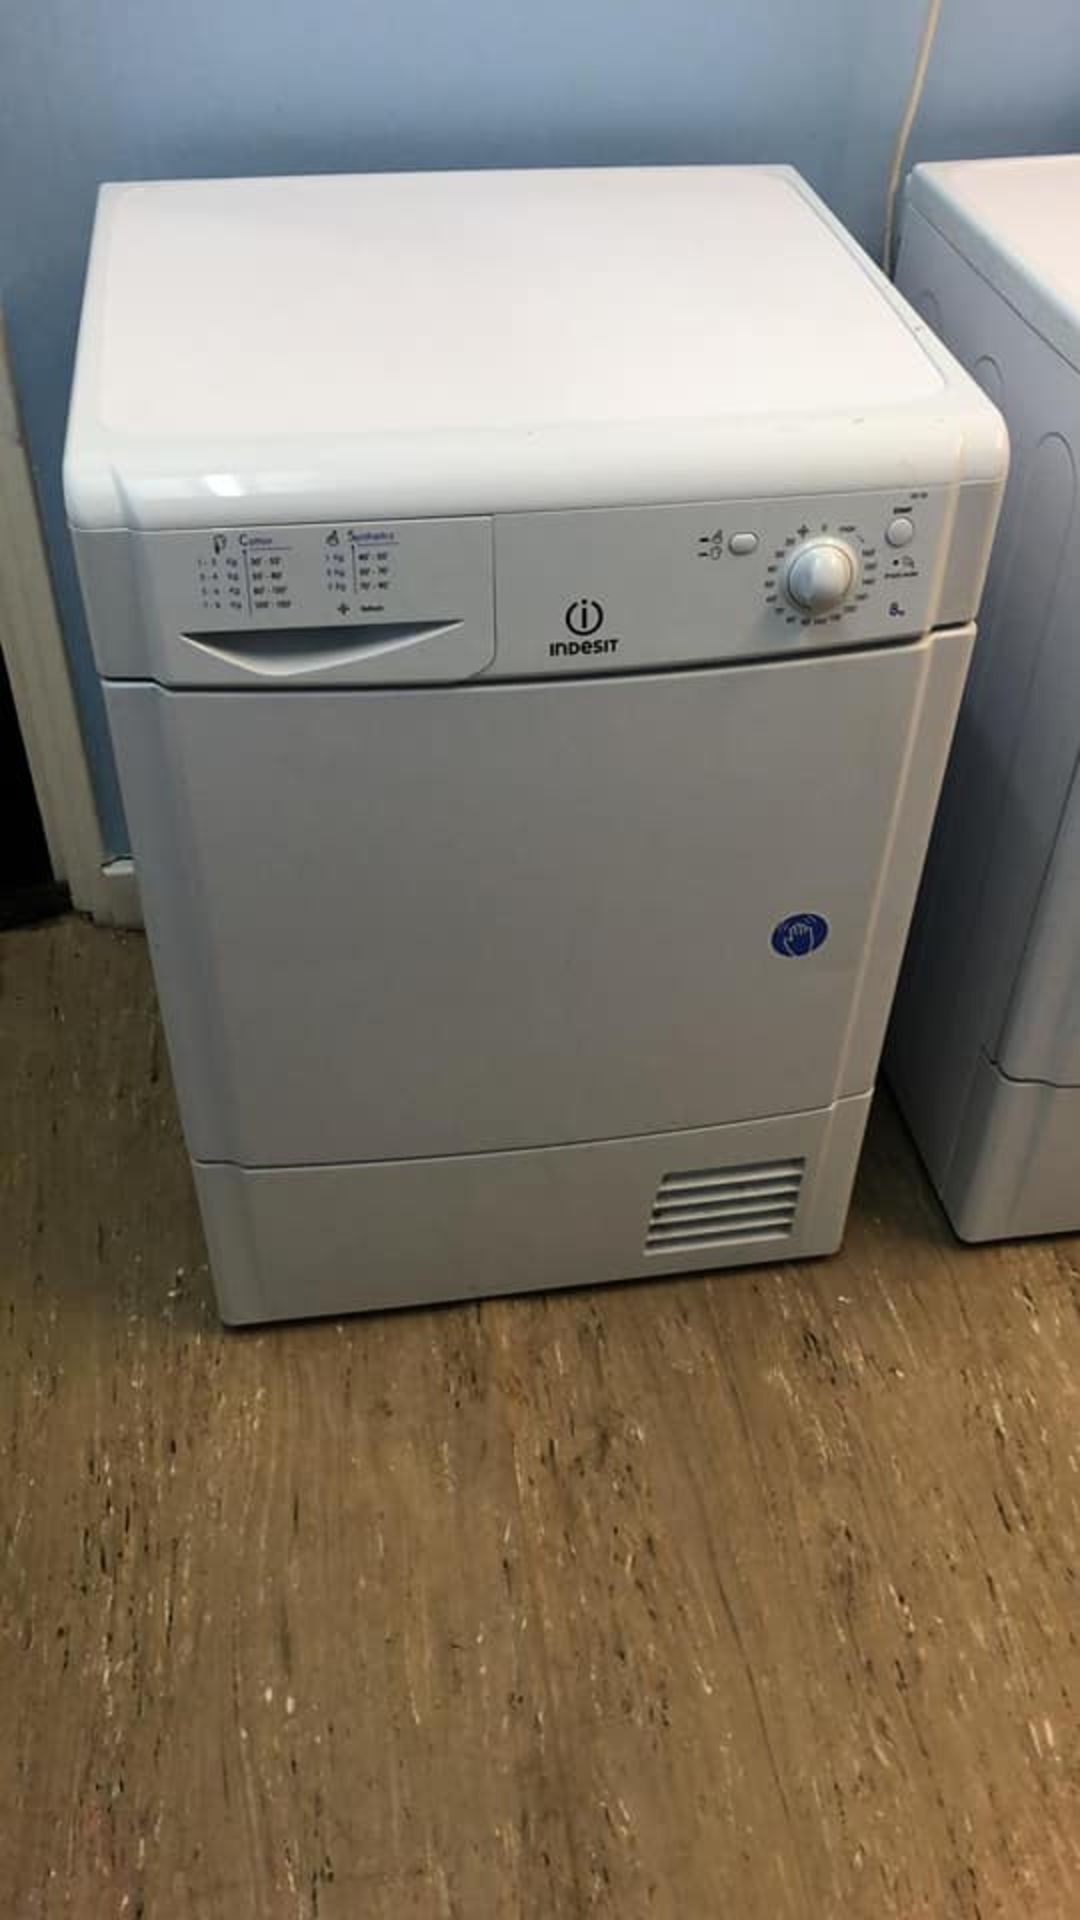 Indesit IDC85 Condenser Tumble Dryer, 8kg Load, C Energy Rating, White H85 x W59.5 x D58.5cm